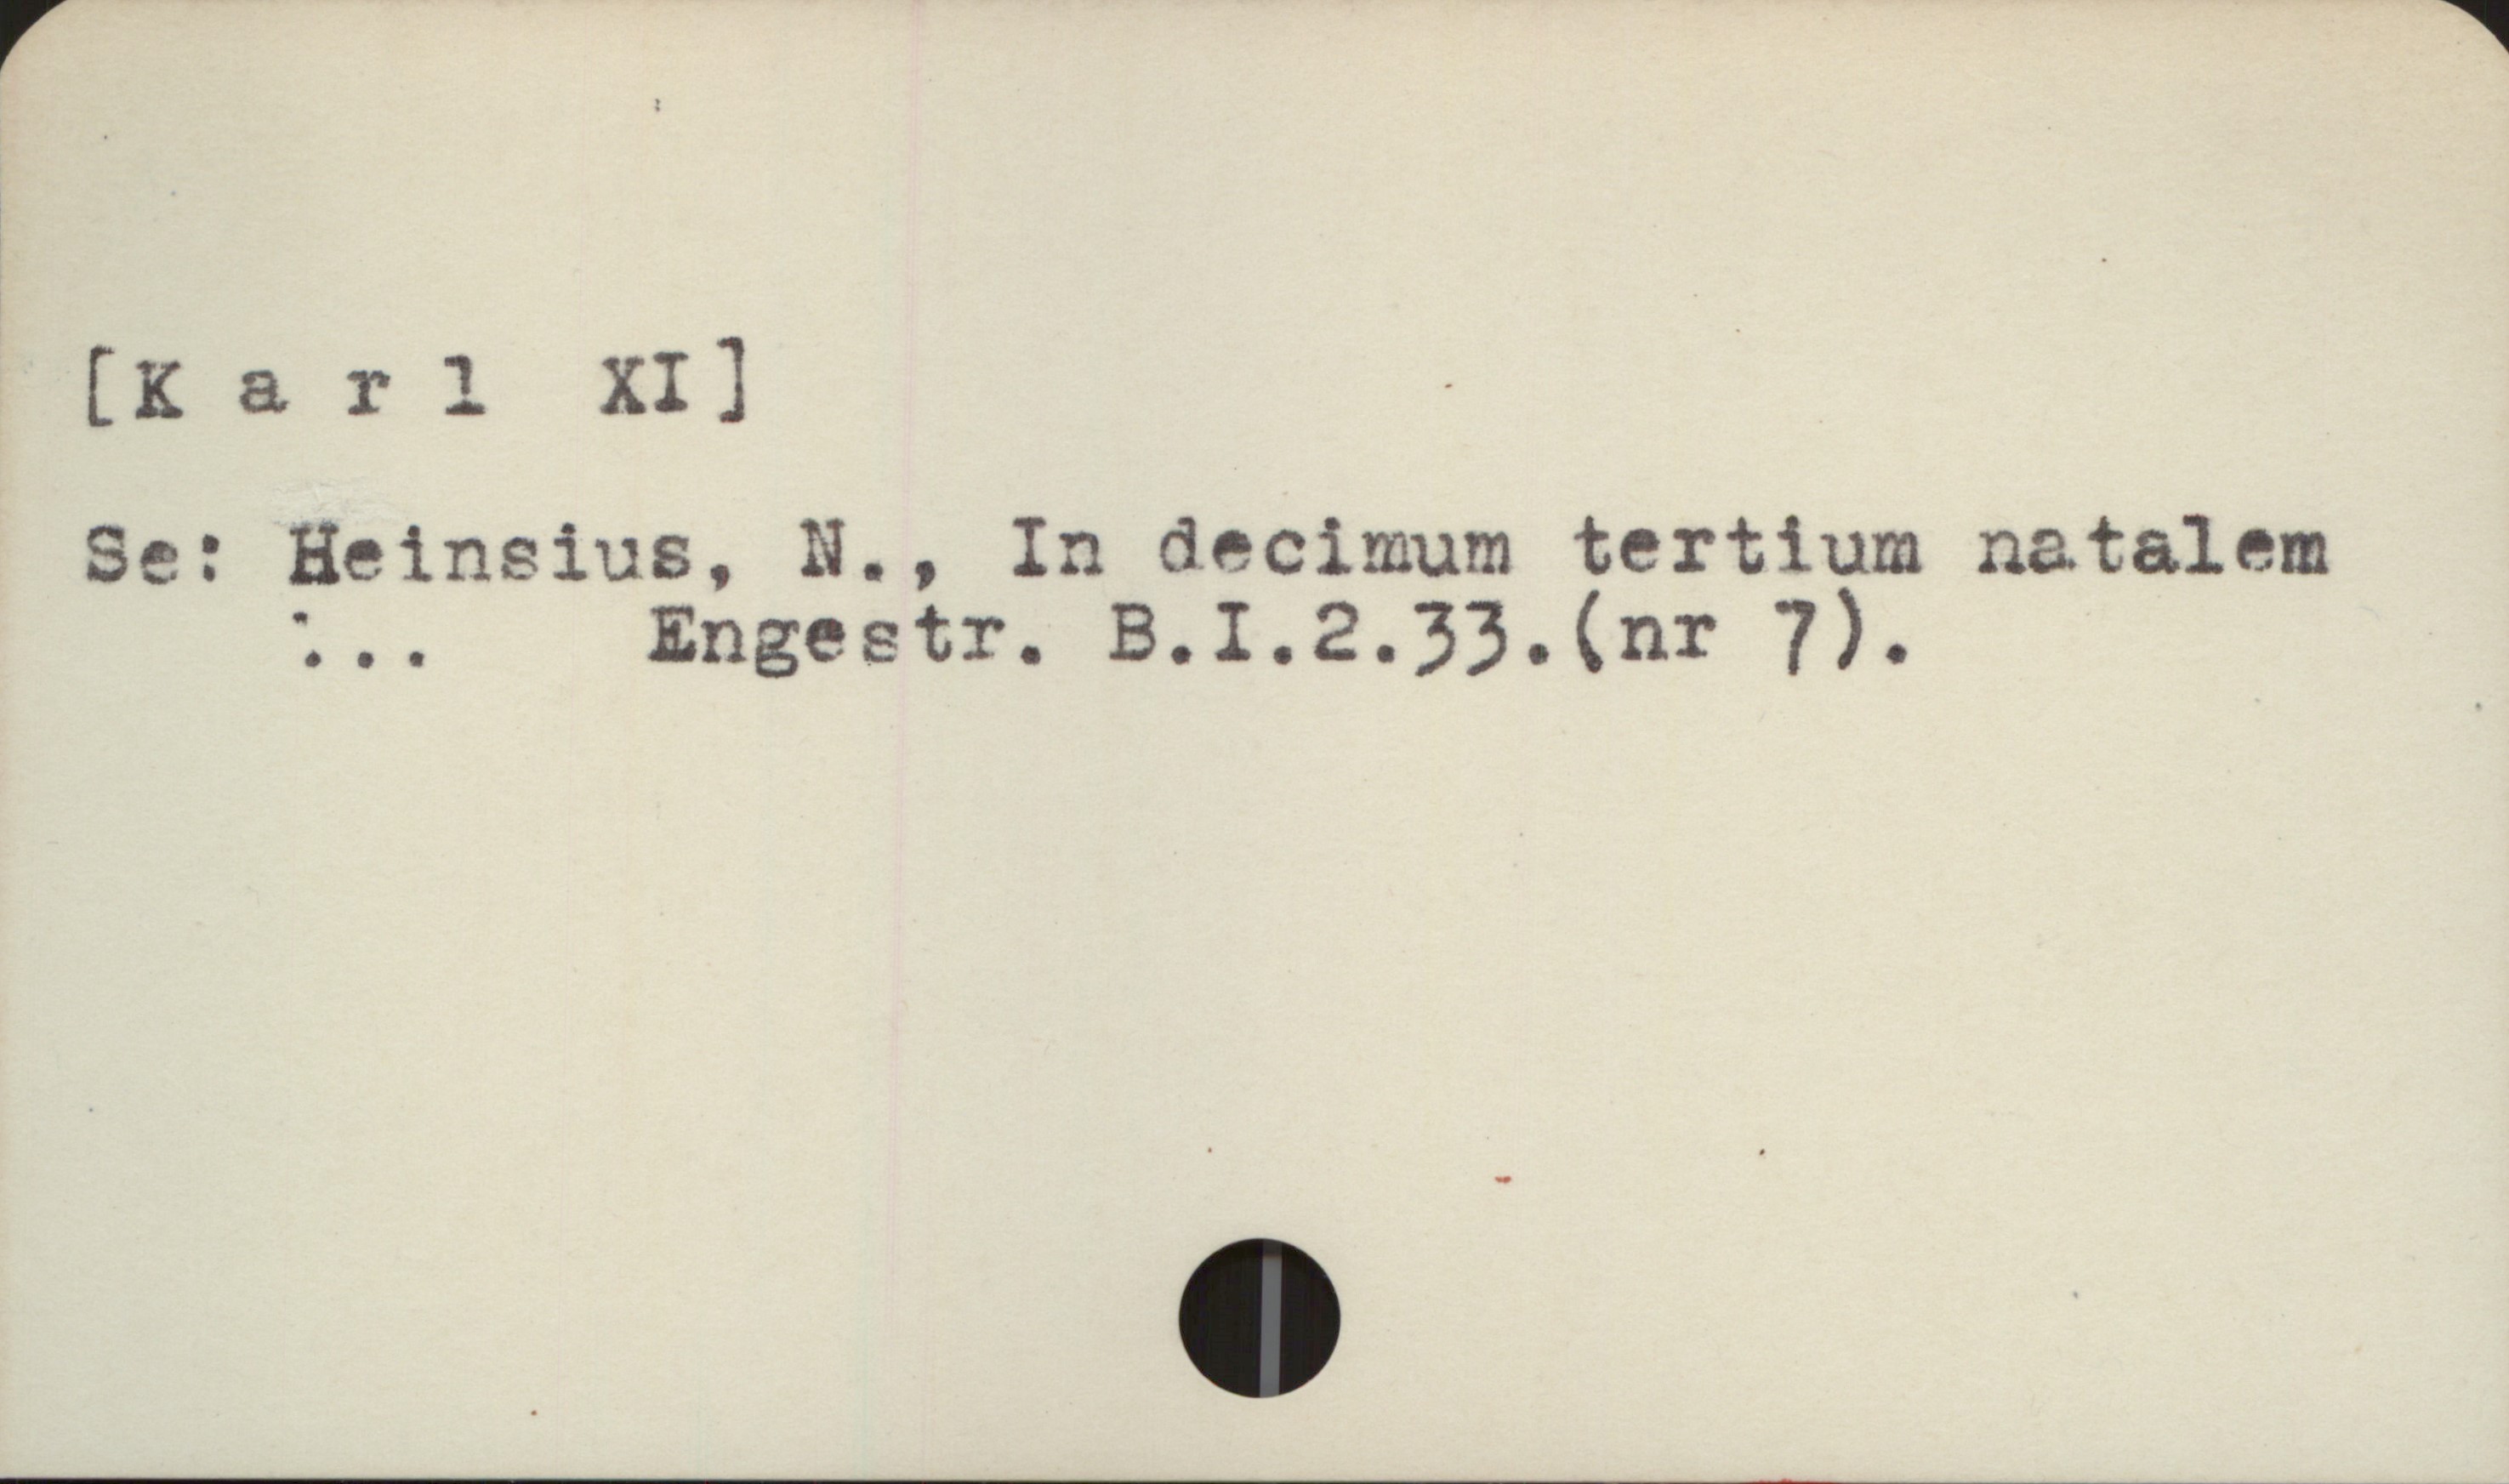  [K & r 1 XI] . *
Se: Heinsius, N., In decimum tertium natalem
"o. Engestr. B.I.2.33j.(nr 7).

